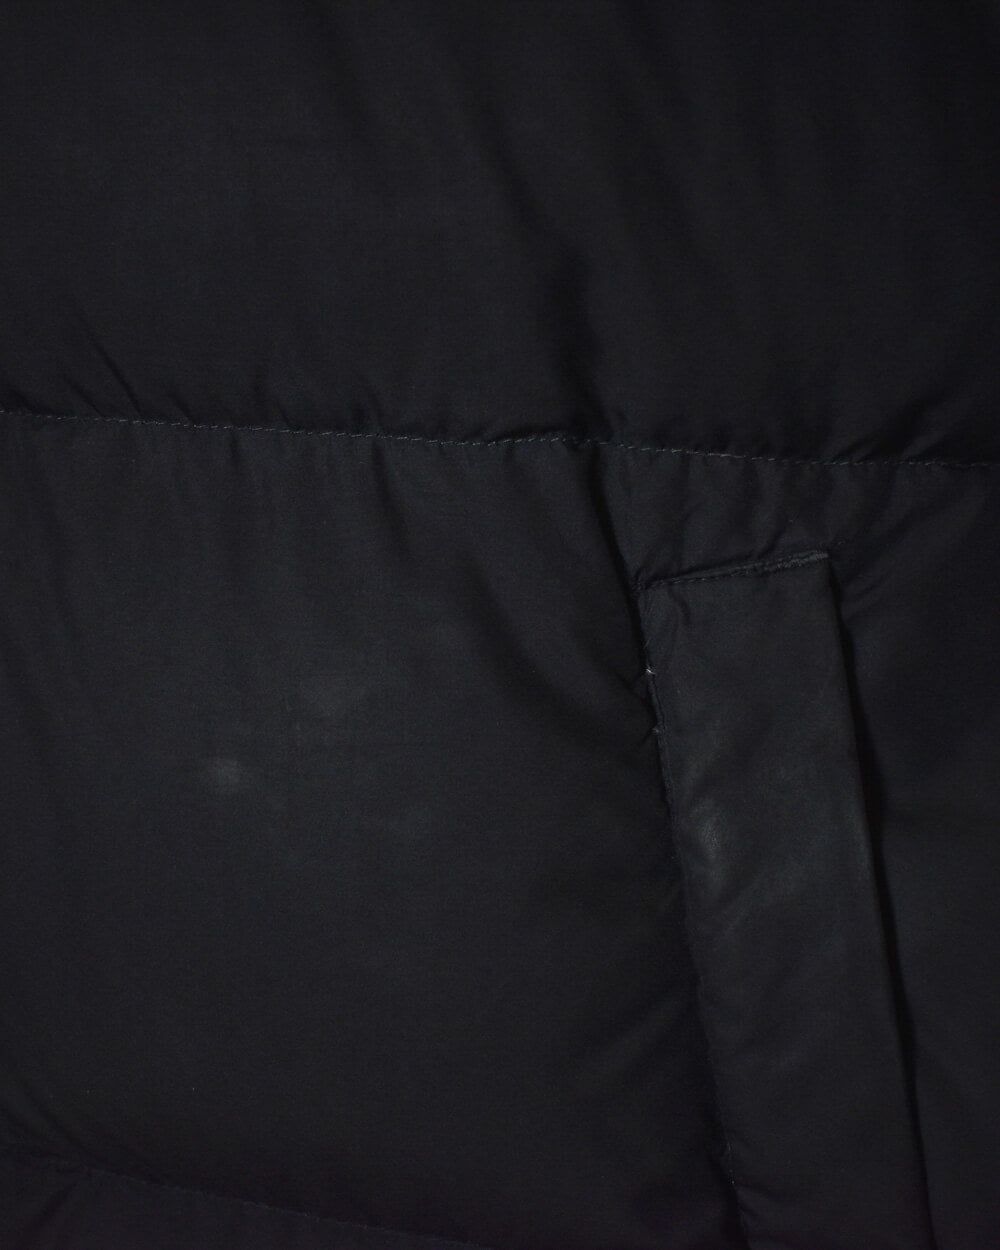 Black Tommy Hilfiger Women's Puffer Jacket - X-Large 